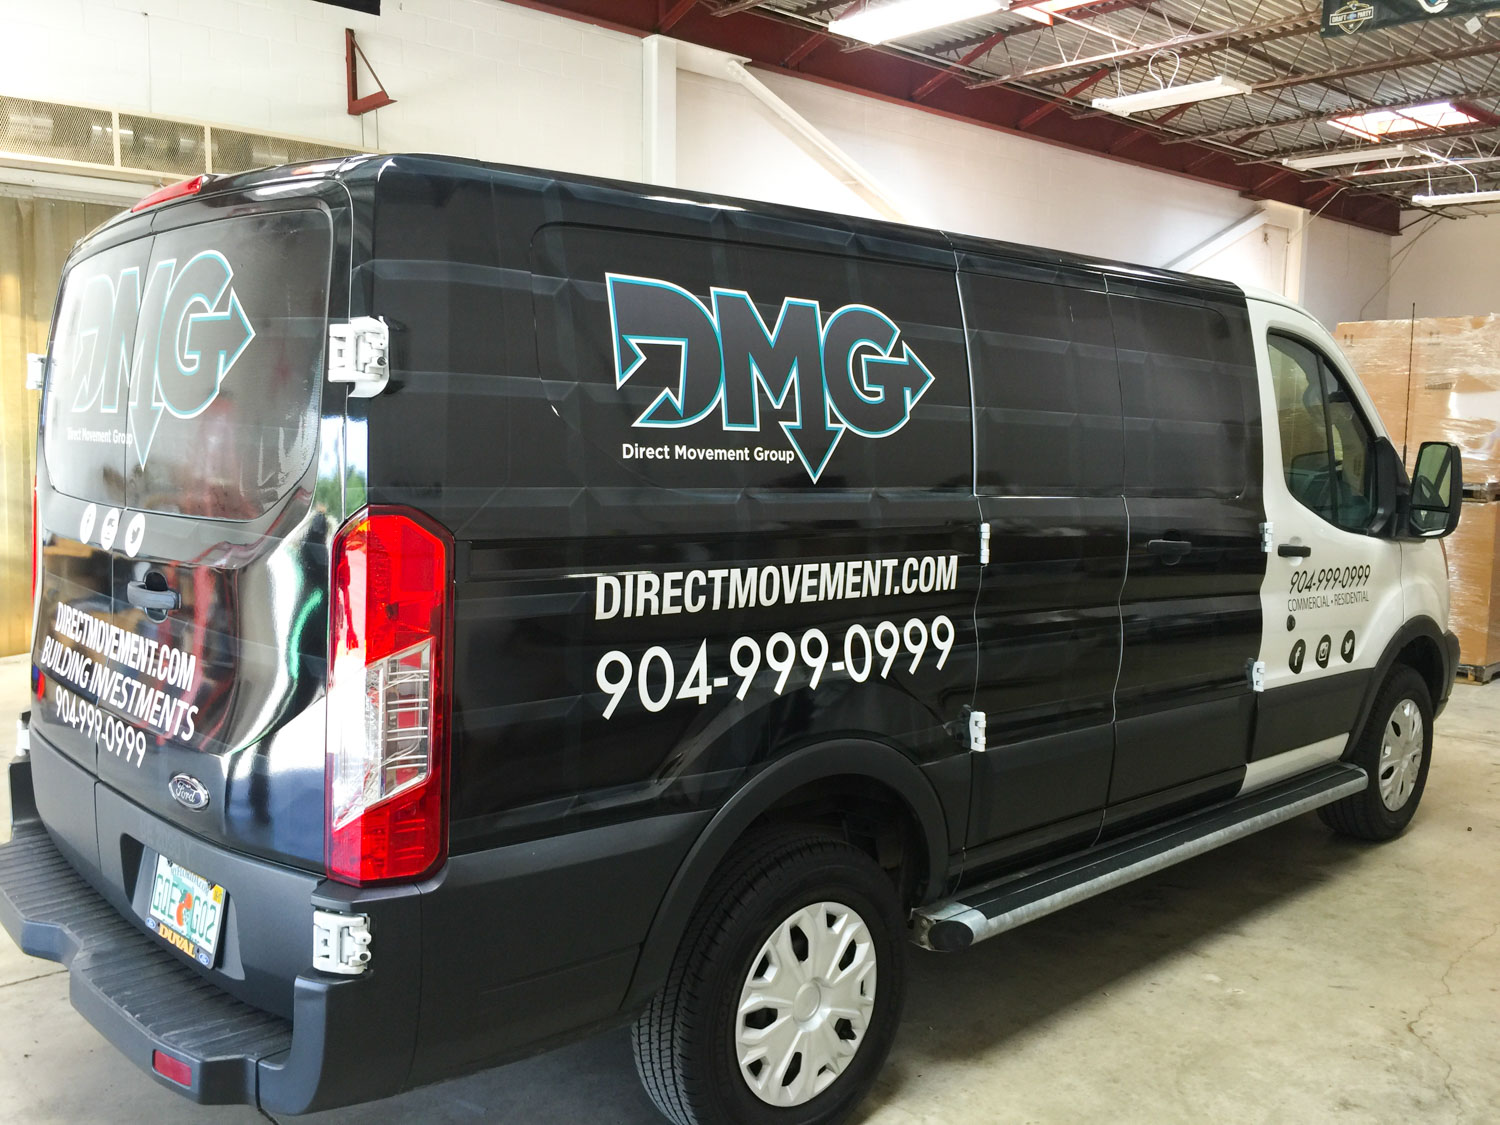 DMG Vehicle Wrap